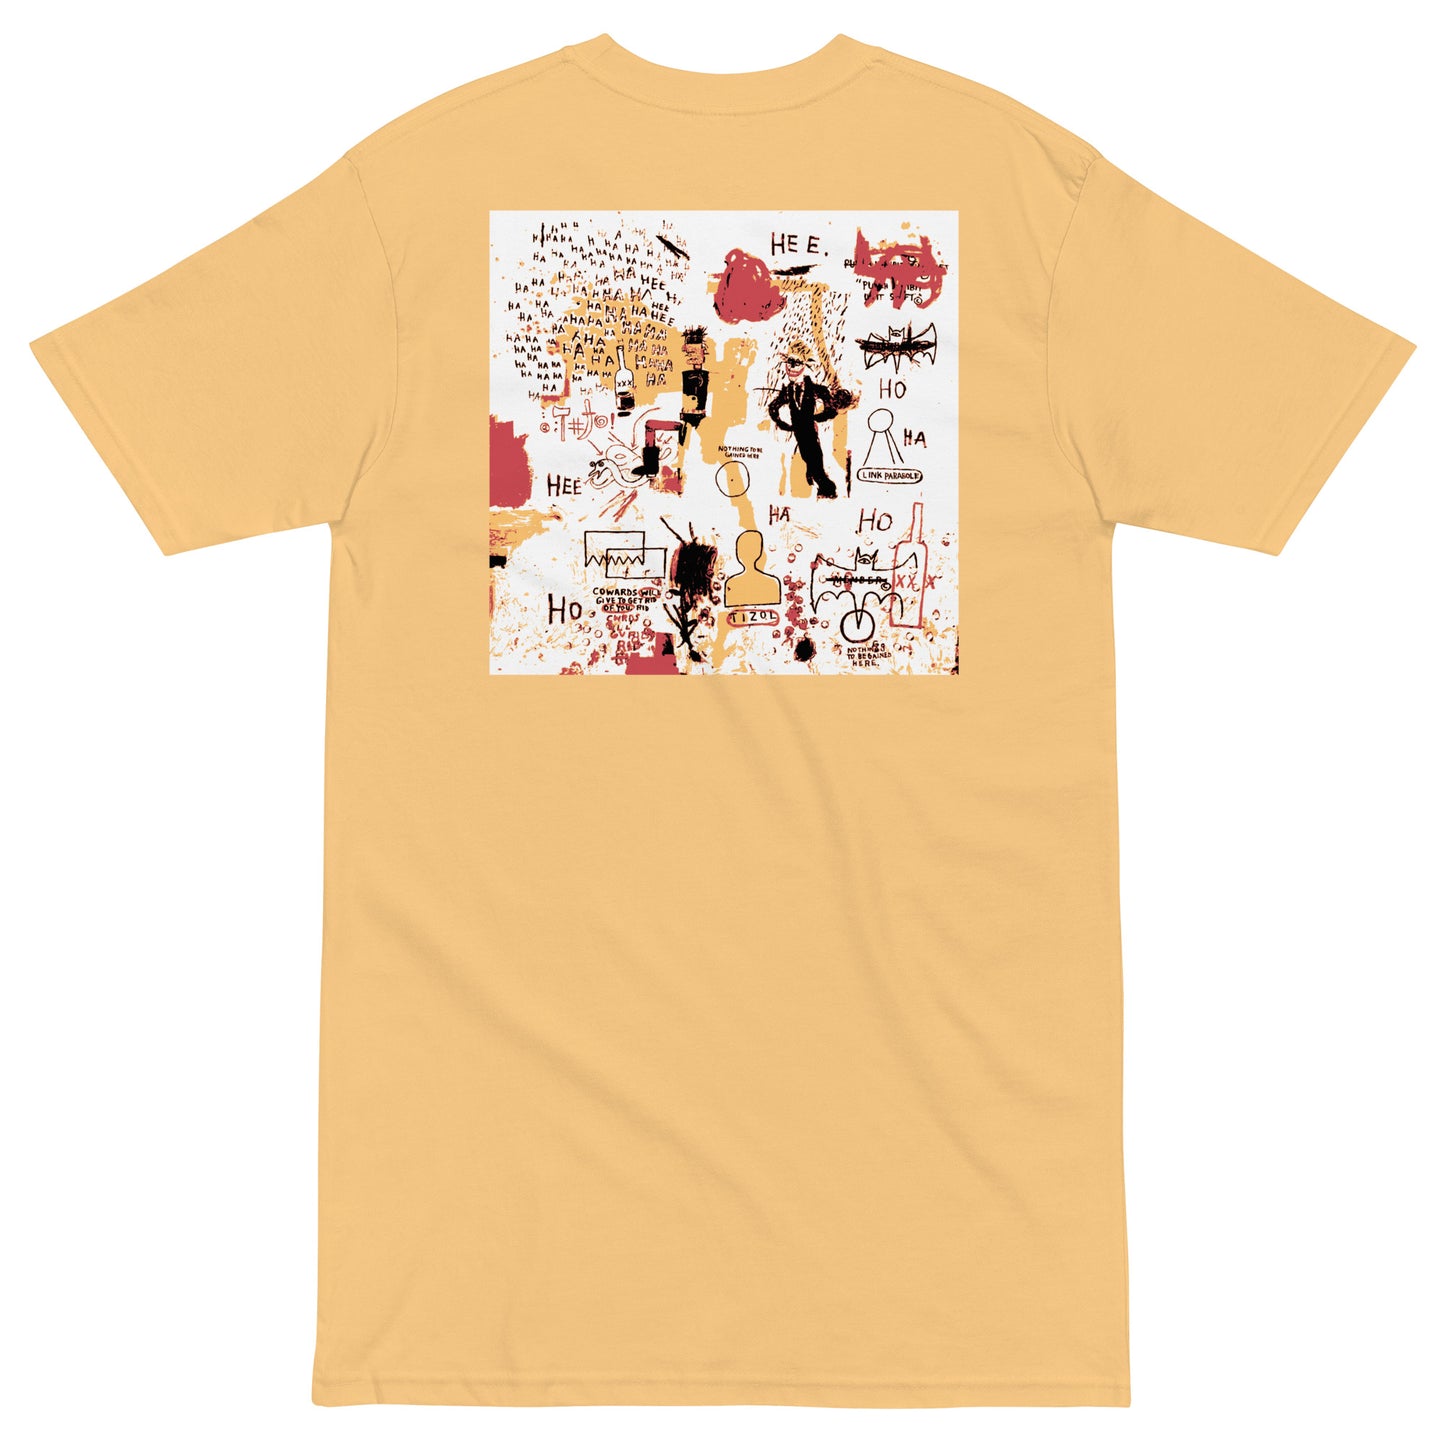 Jean-Michel Basquiat "Riddle Me This Batman" Artwork Embroidered + Printed Premium T-shirt